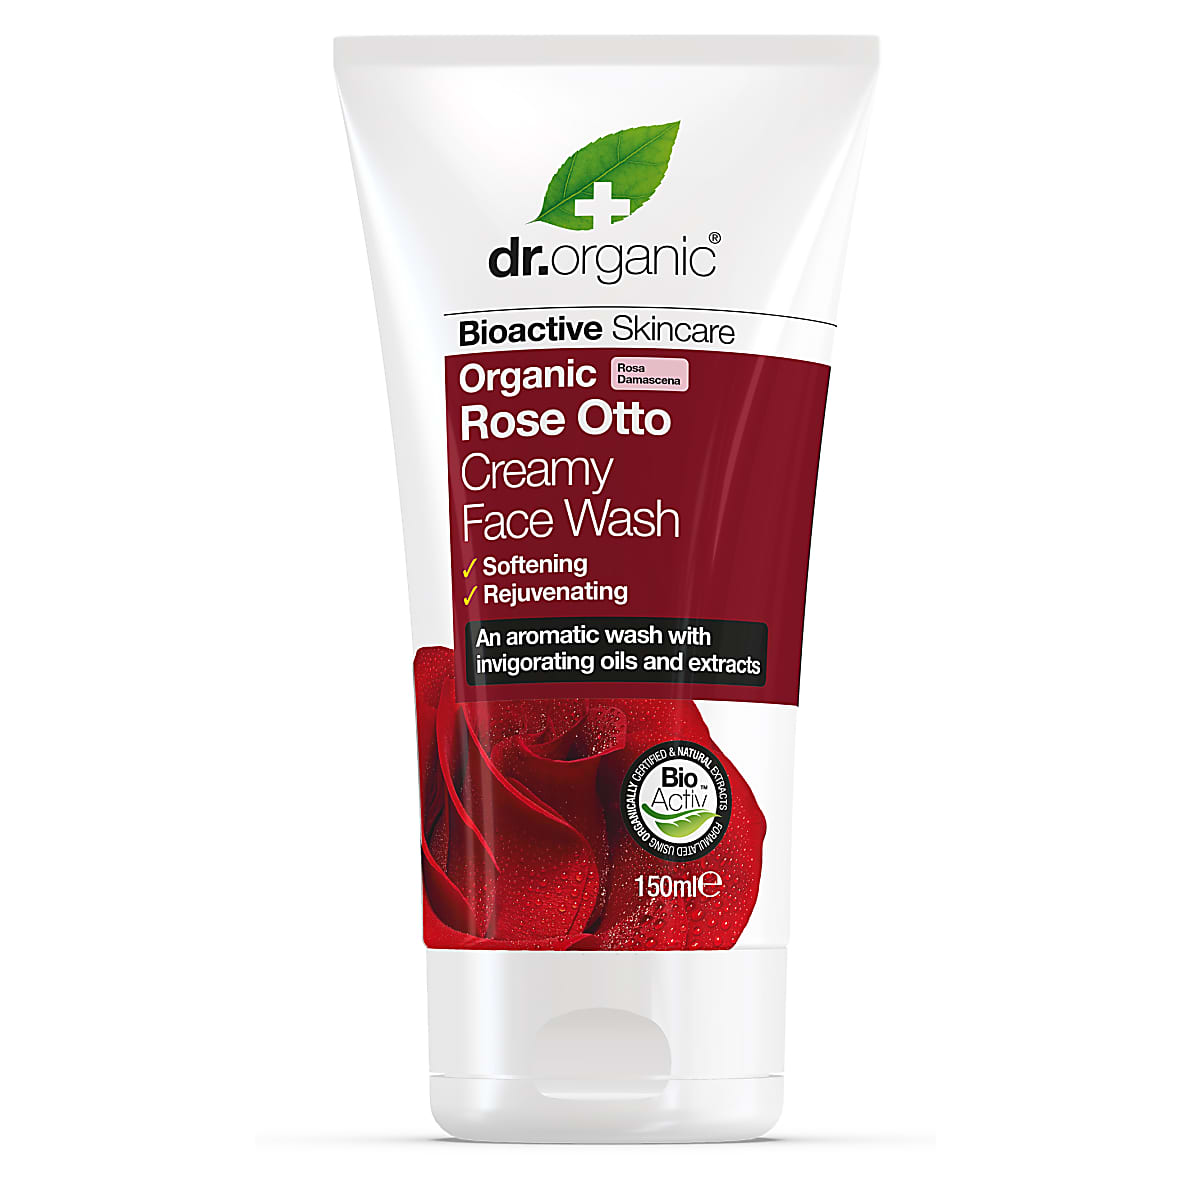 dr organic Rose Otto Creamy Face Wash